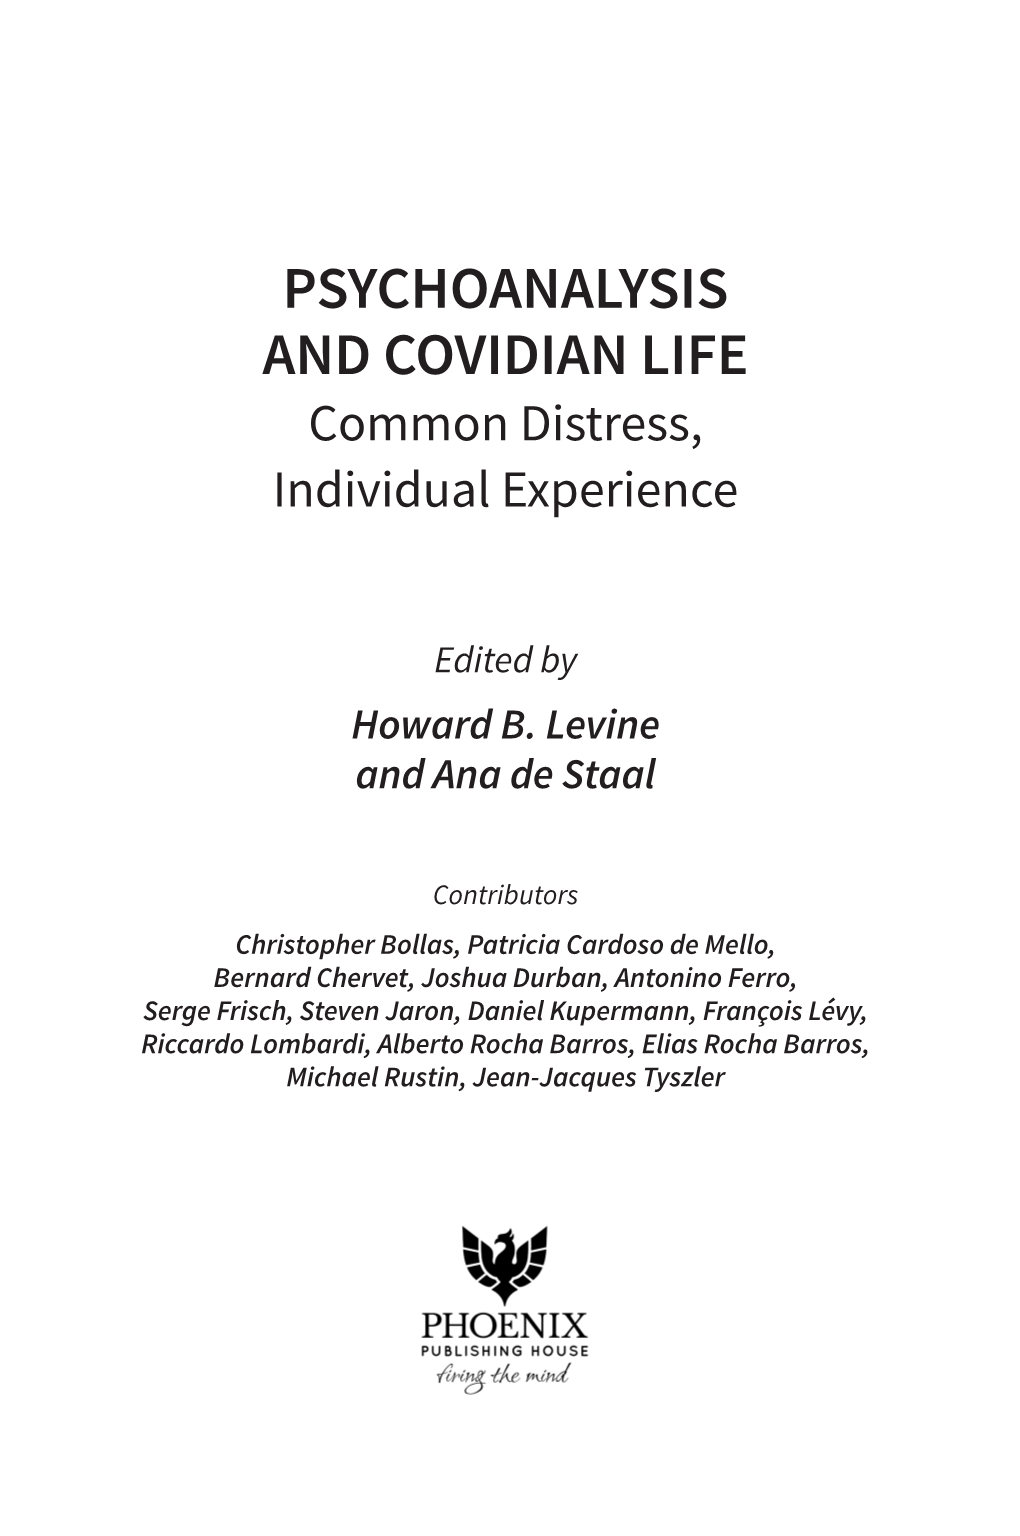 PSYCHOANALYSIS and COVIDIAN LIFE Common Distress, Individual Experience